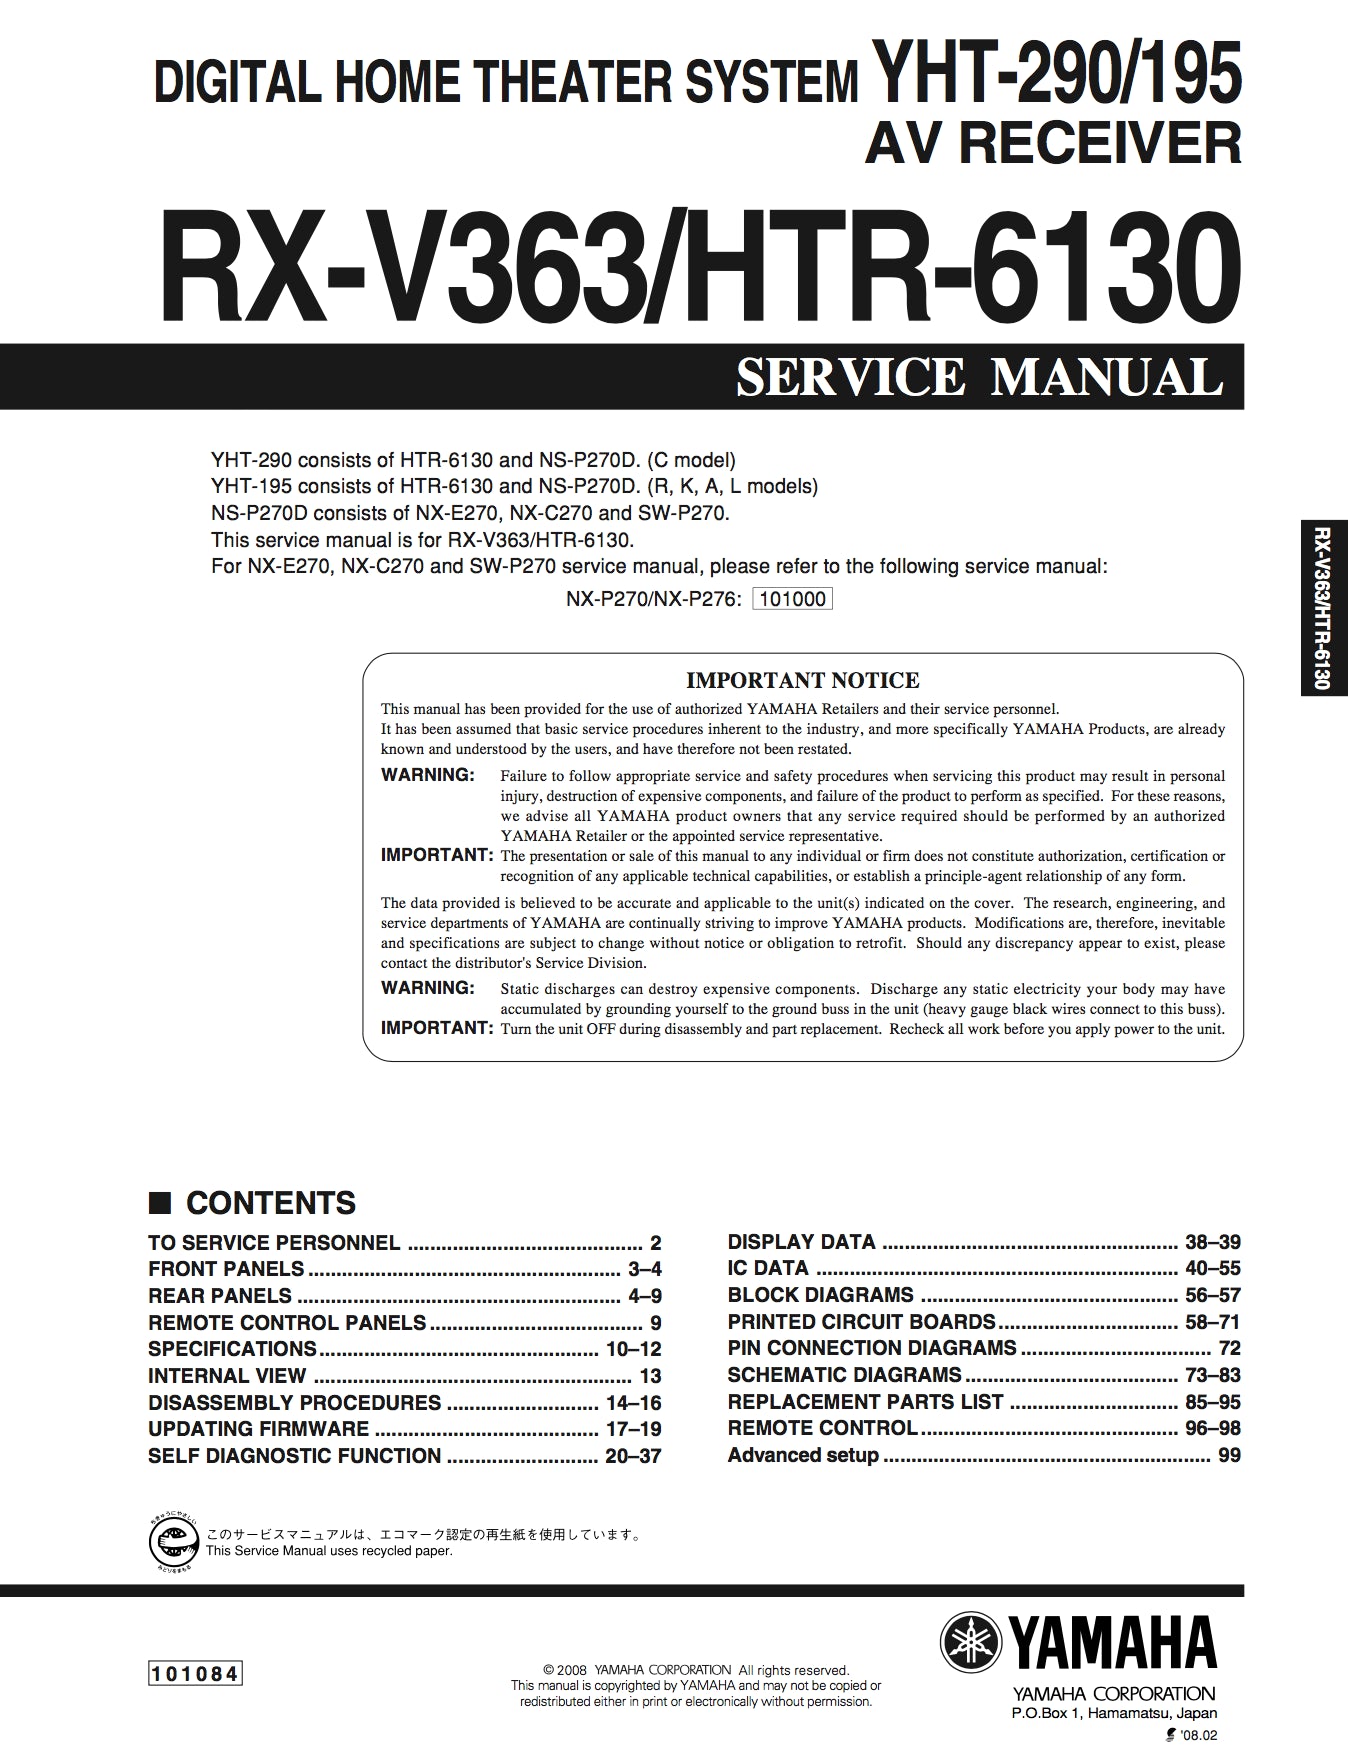 Yamaha RX-V363 HTR-6130 Service Manual